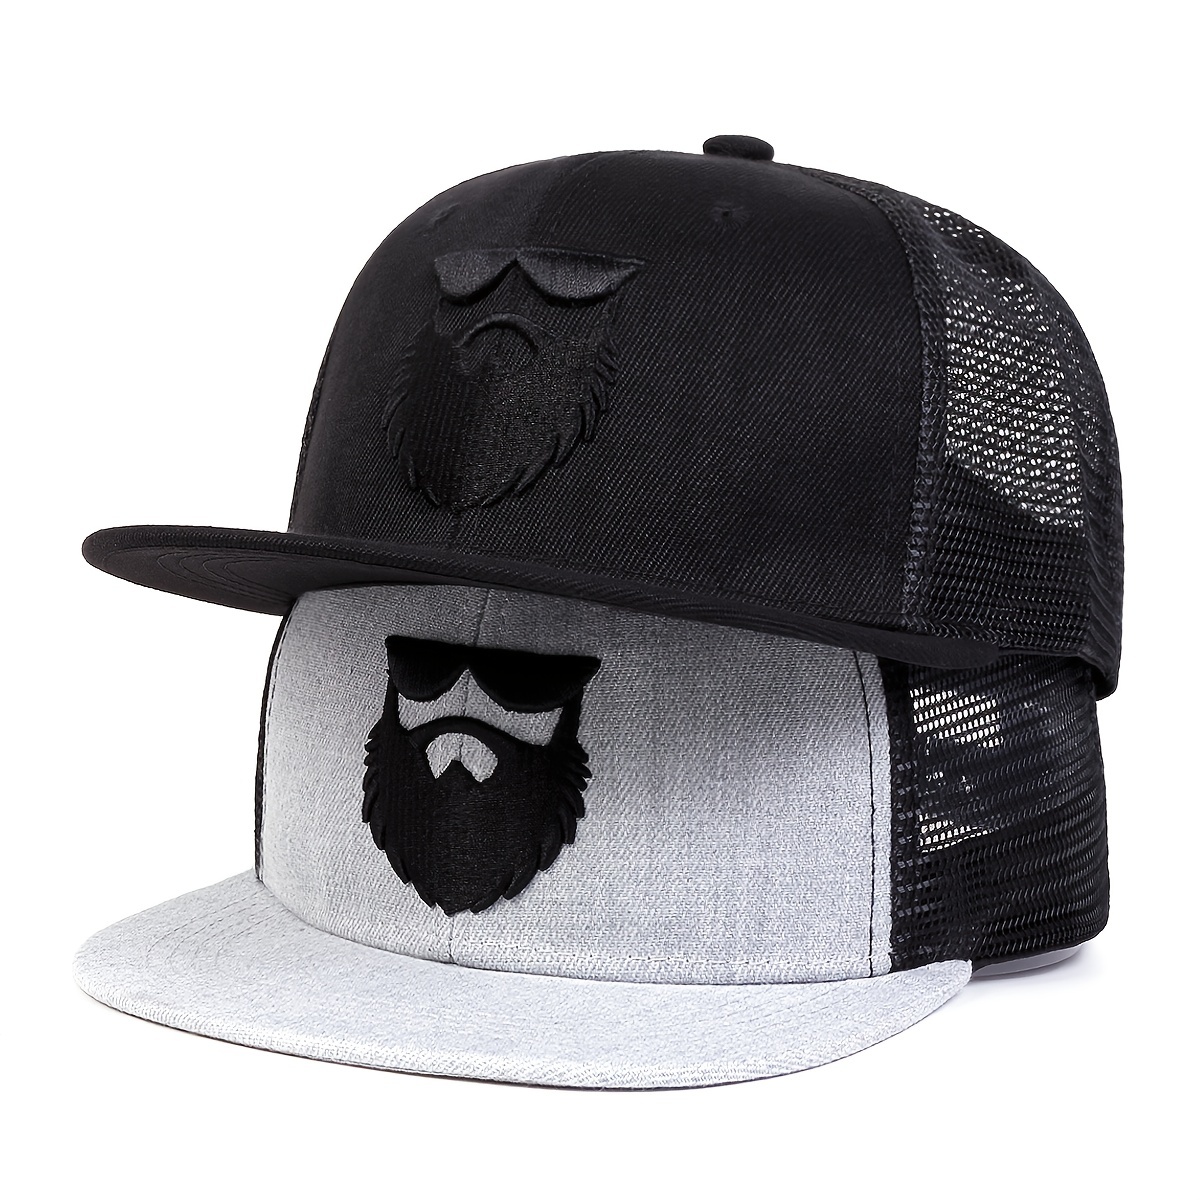 Beard Man Embroidery Snapback Hats Hip Hop Trendy Adjustable Baseball Cap, Baseball Hat, Dad Hats Casual Breathable, Black and Grey Trucker Hat